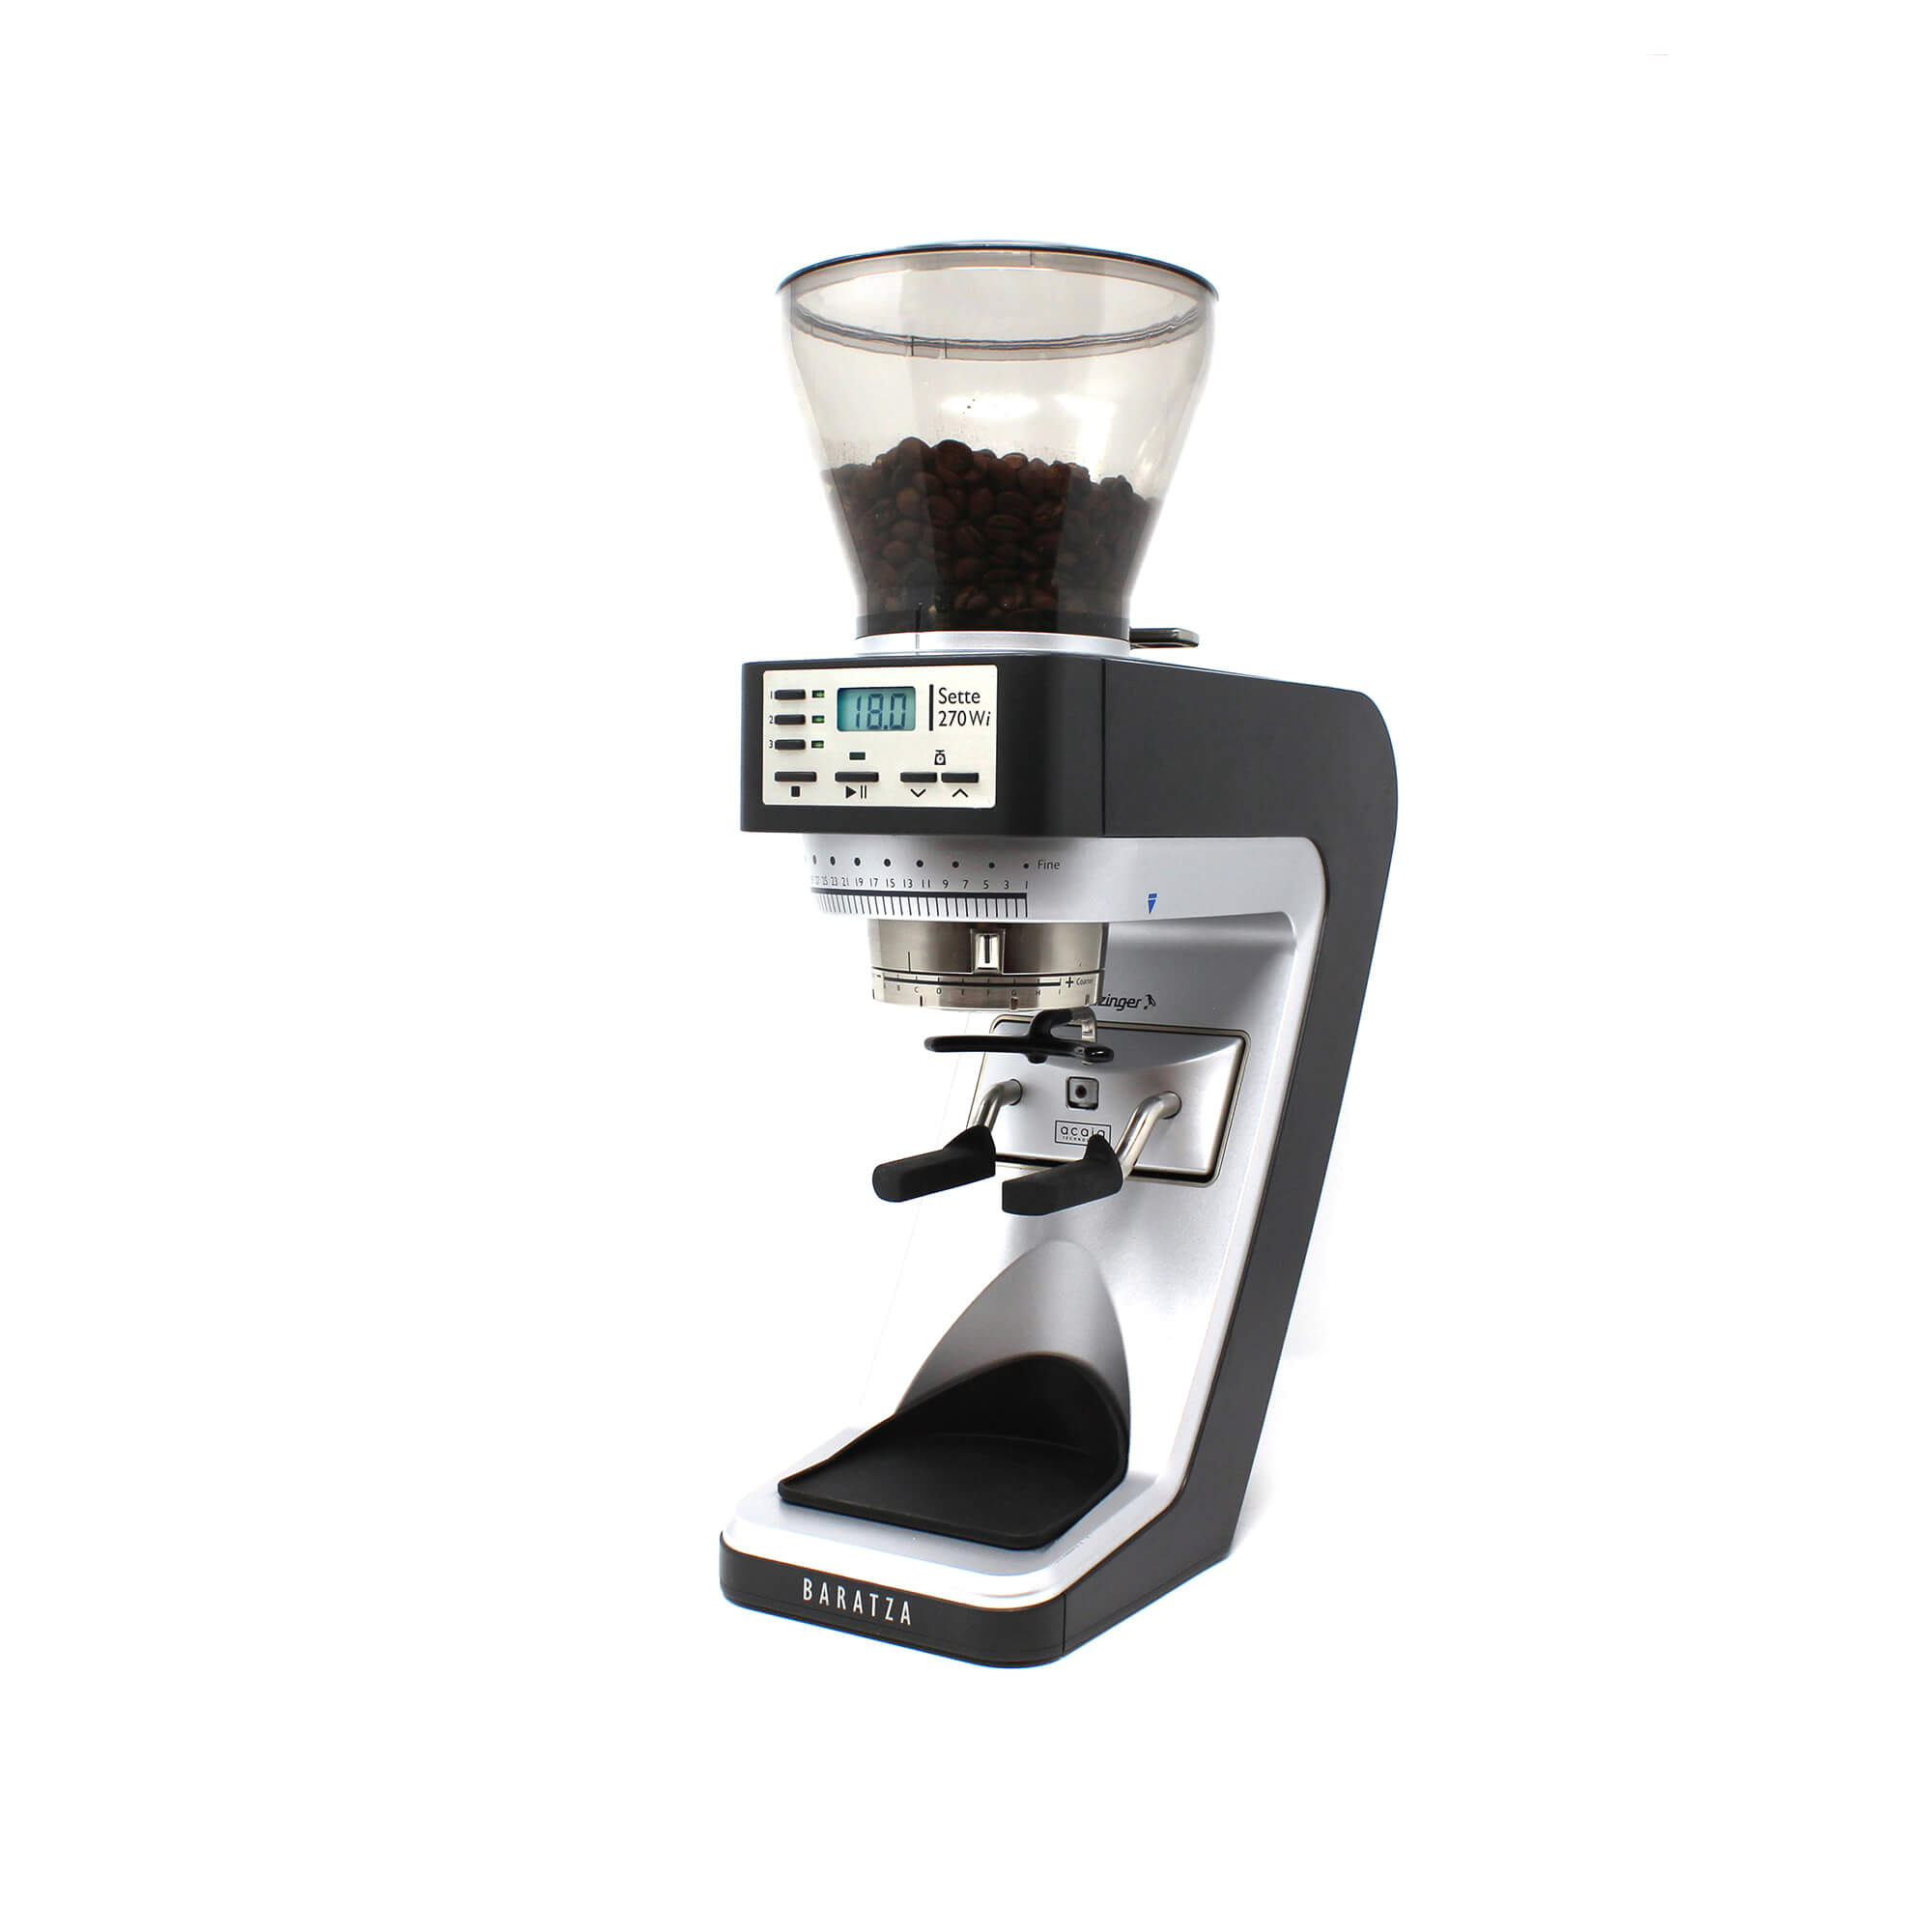 Formación Colega regular Baratza Sette 270 Coffee Grinder | Coffee Machines & Grinders | L'affare